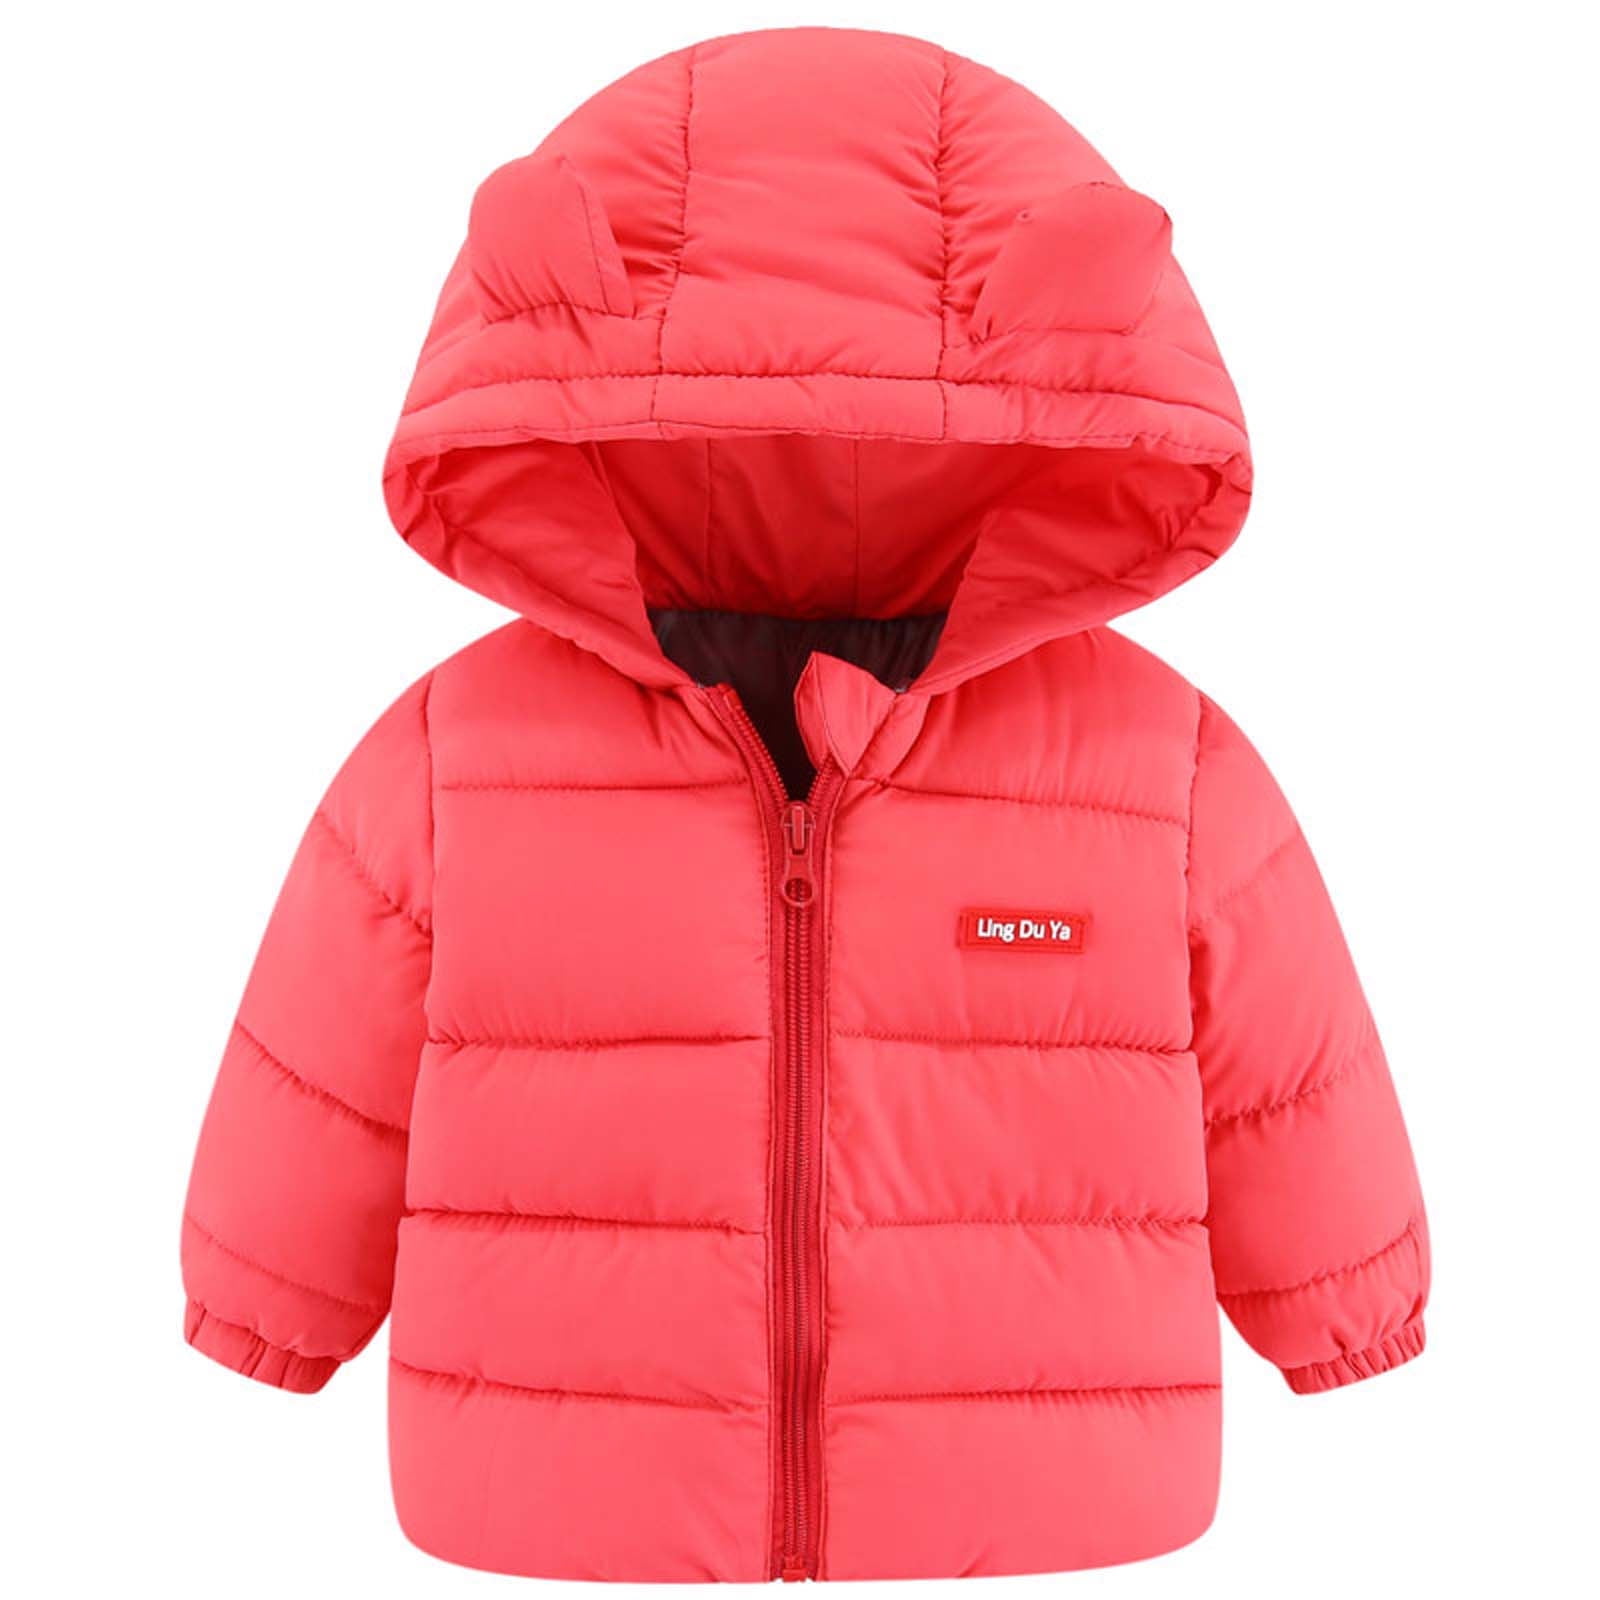 Cute Newborn Baby Toddler Kids Girls Winter Hooded Coat Outerwear Jacket Clothes 